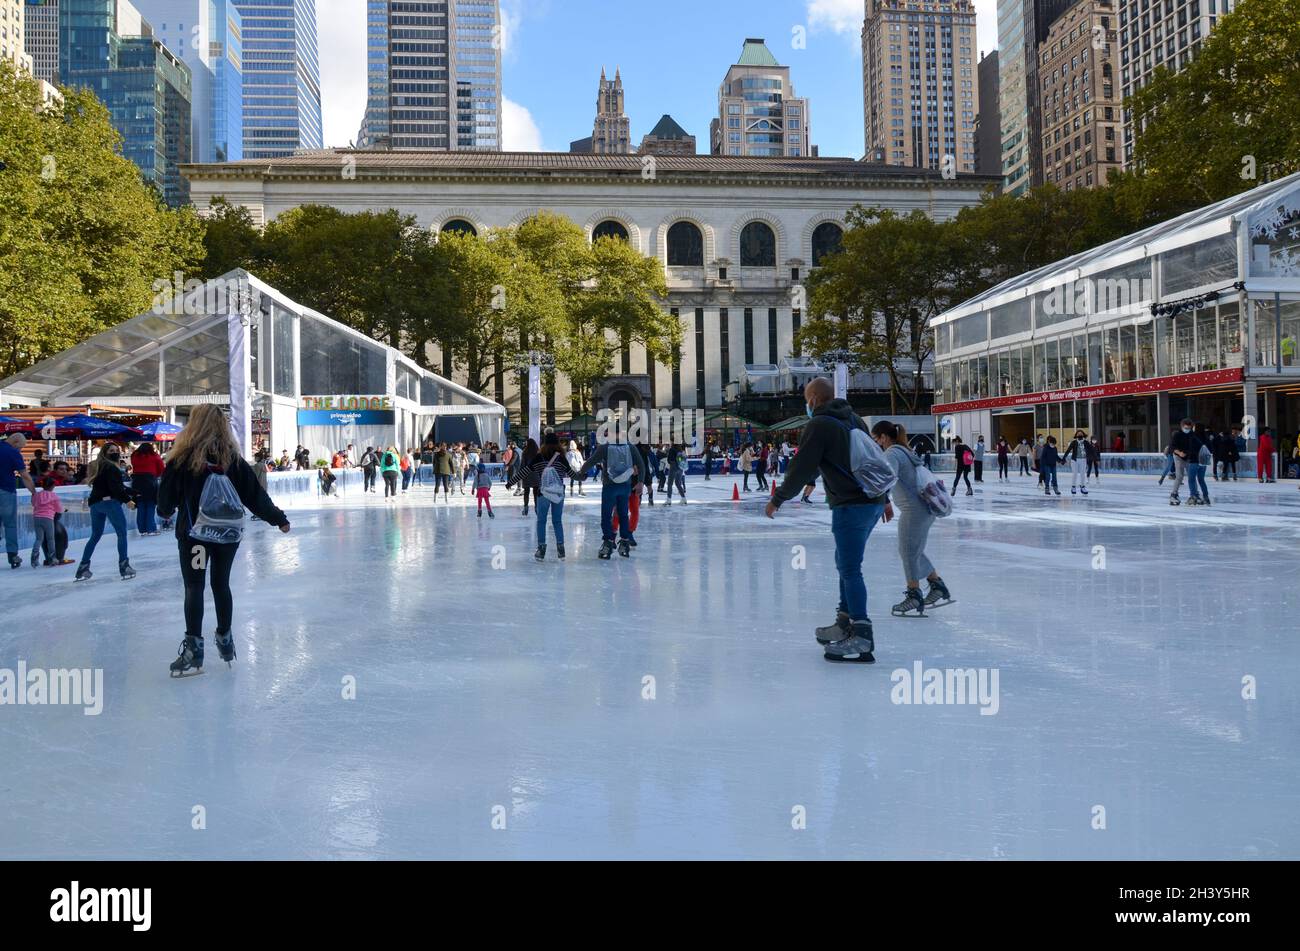 Ice skating rink in Bryant Park in New York City on October 30, 2021. Stock Photo